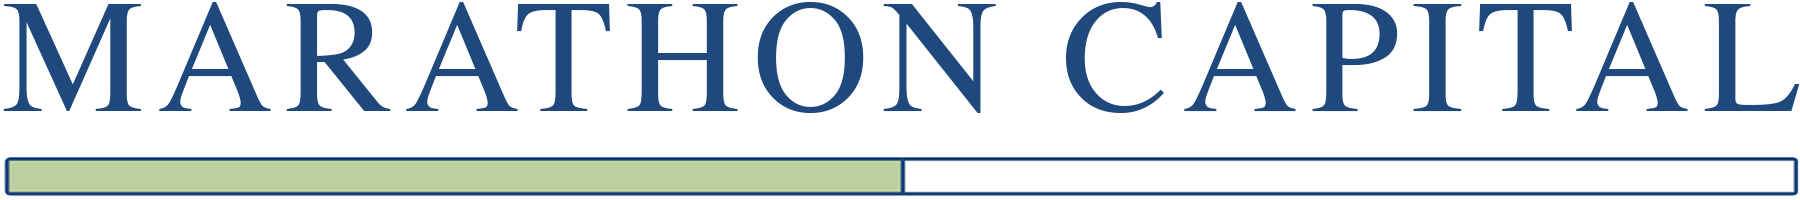 Marathon Capital logo